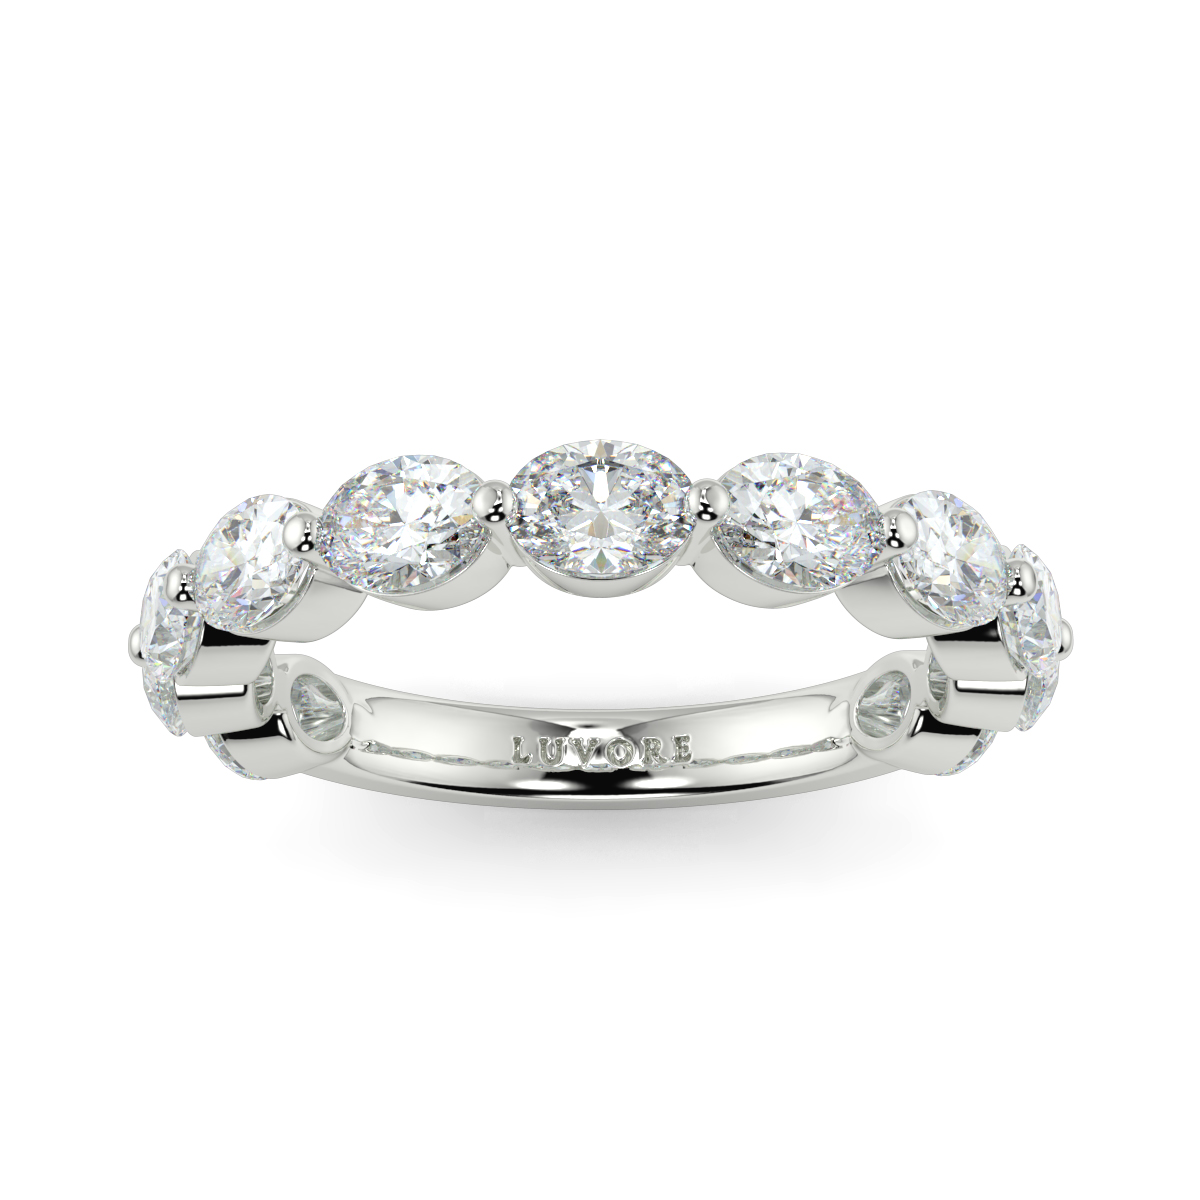 Oval Shared Claw Diamond Set Wedding Band Luvore Diamonds